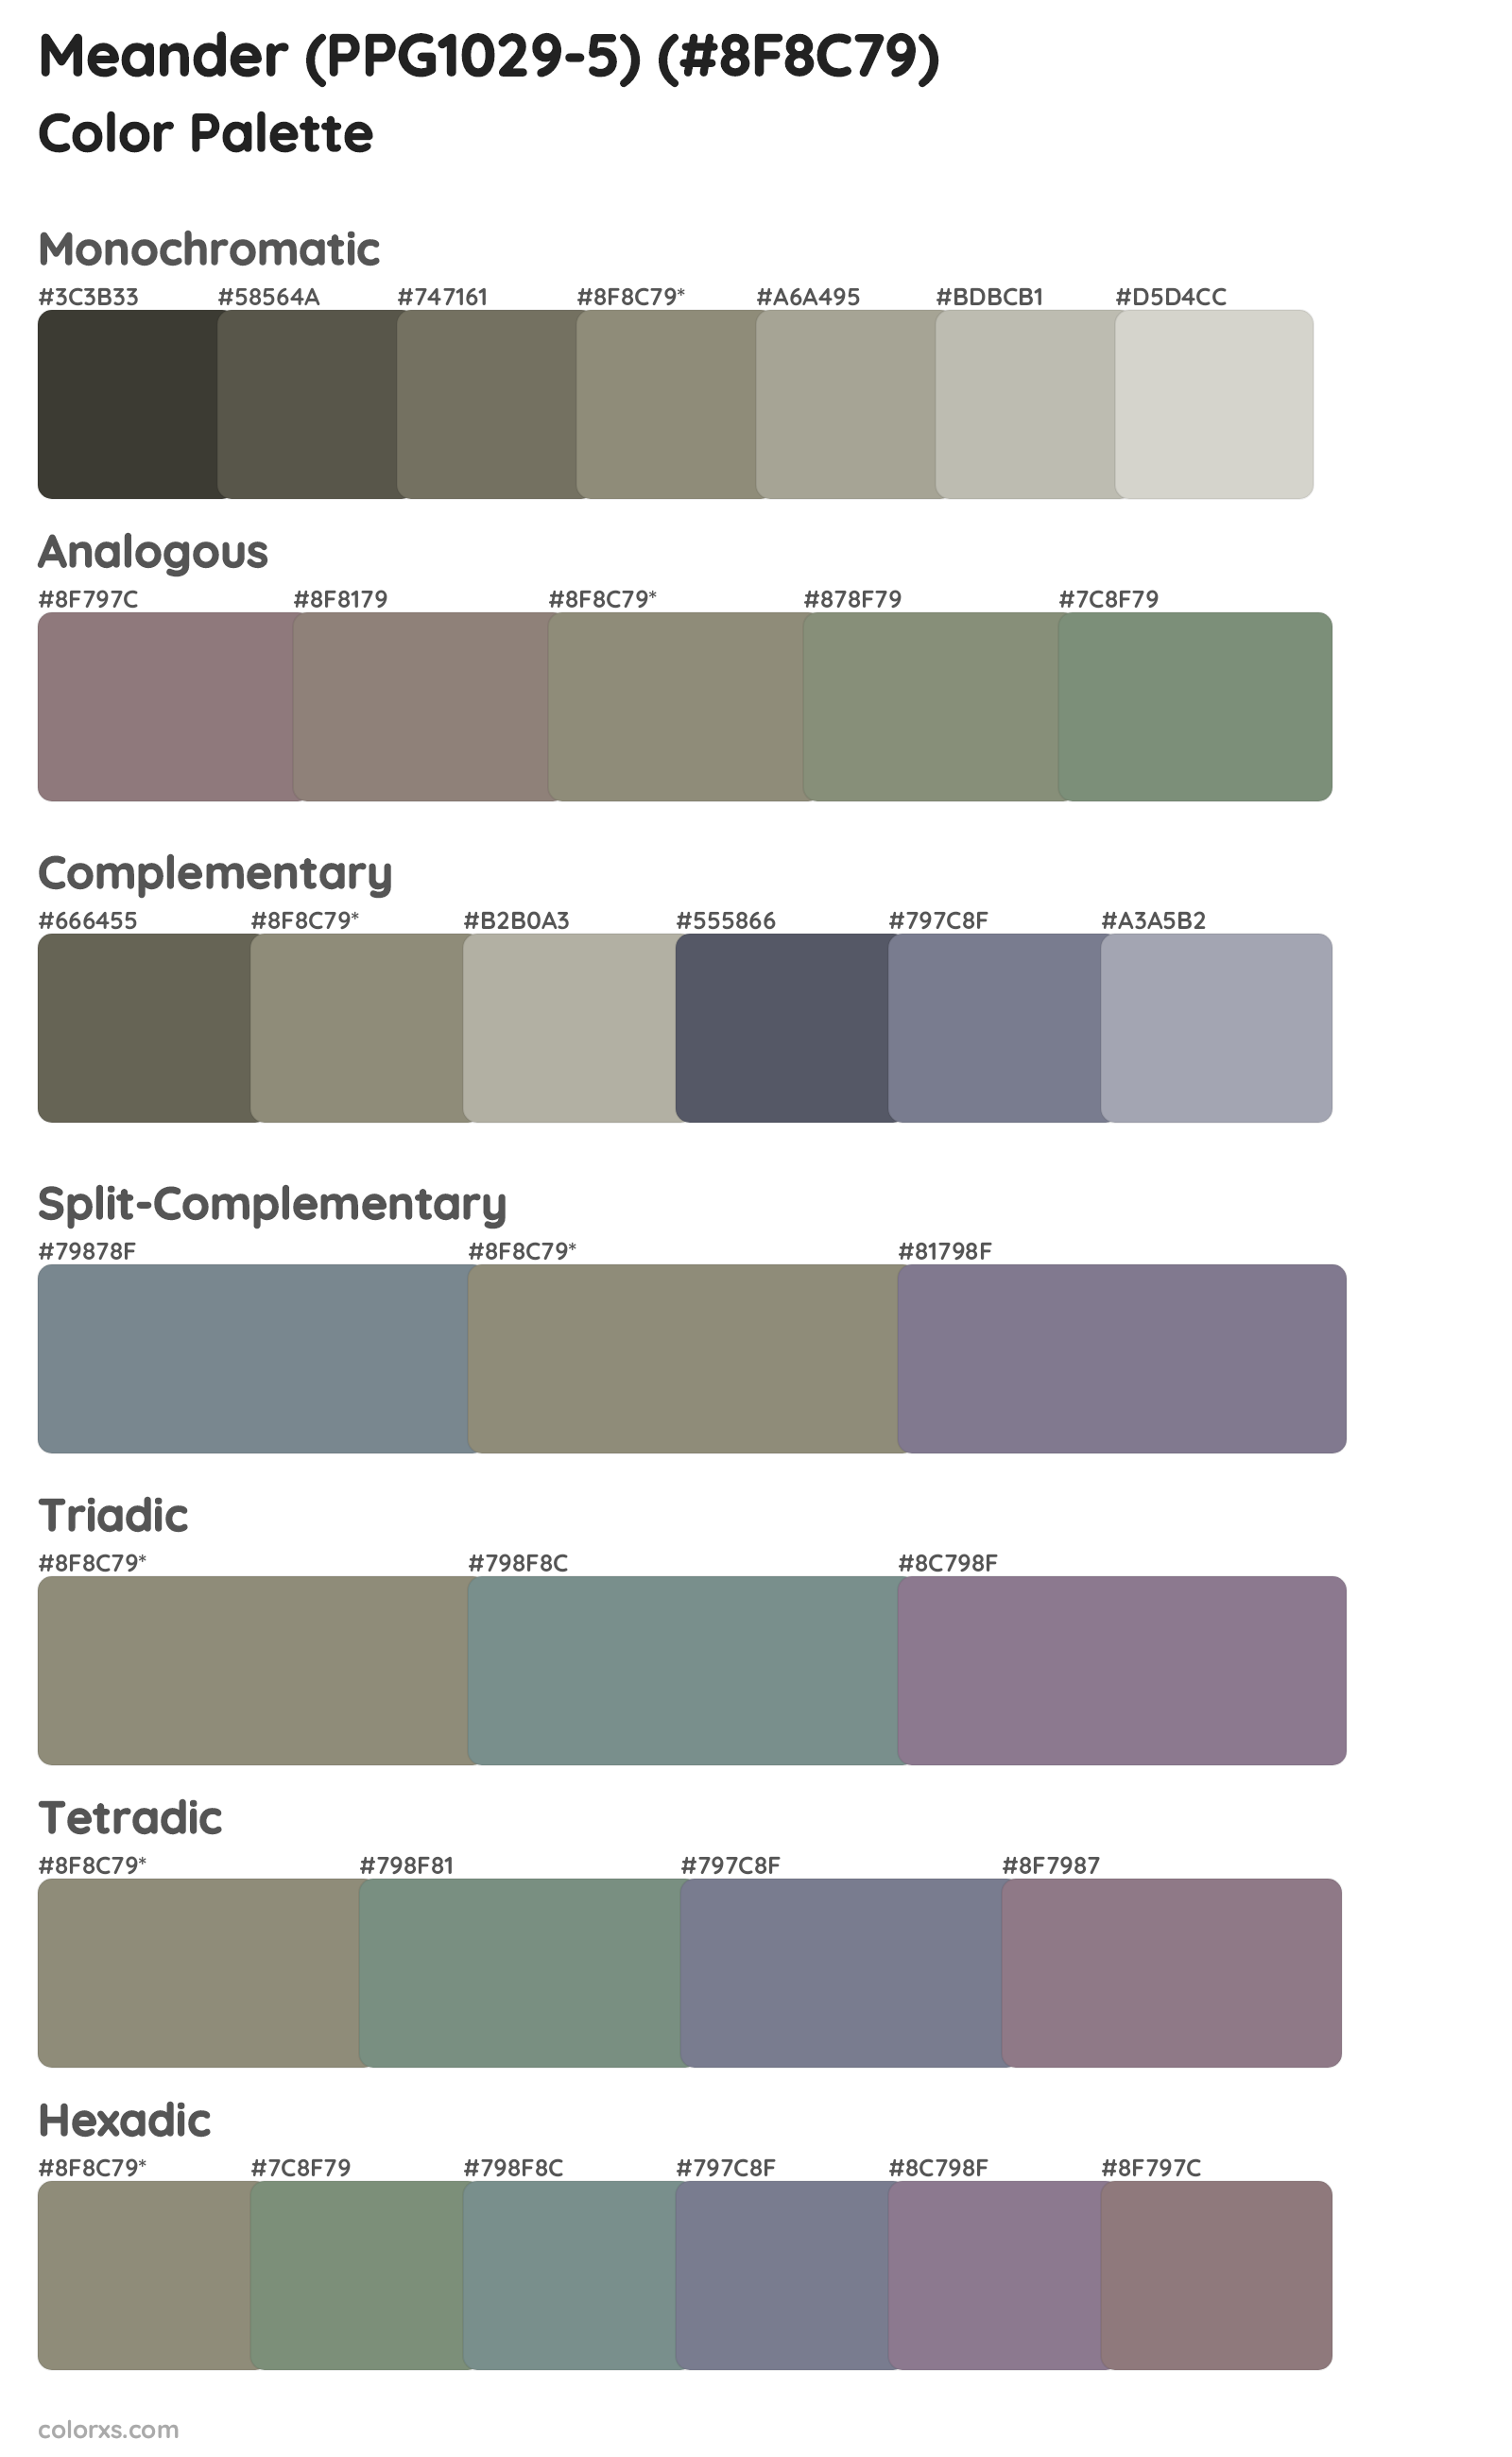 Meander (PPG1029-5) Color Scheme Palettes